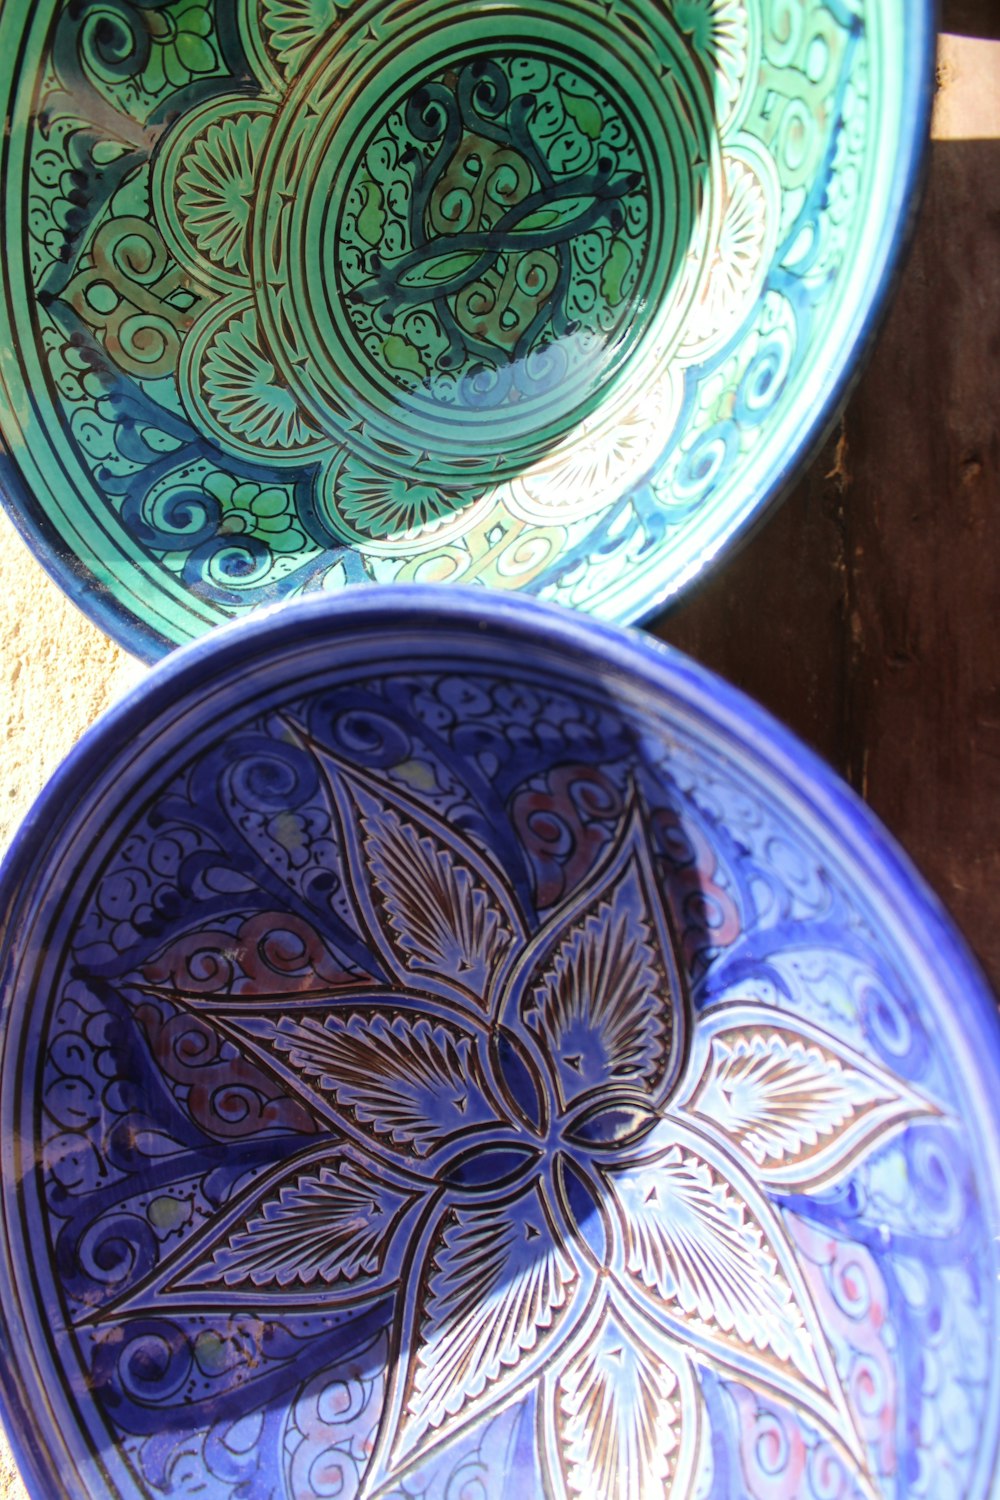 blue and white round ceramic plate